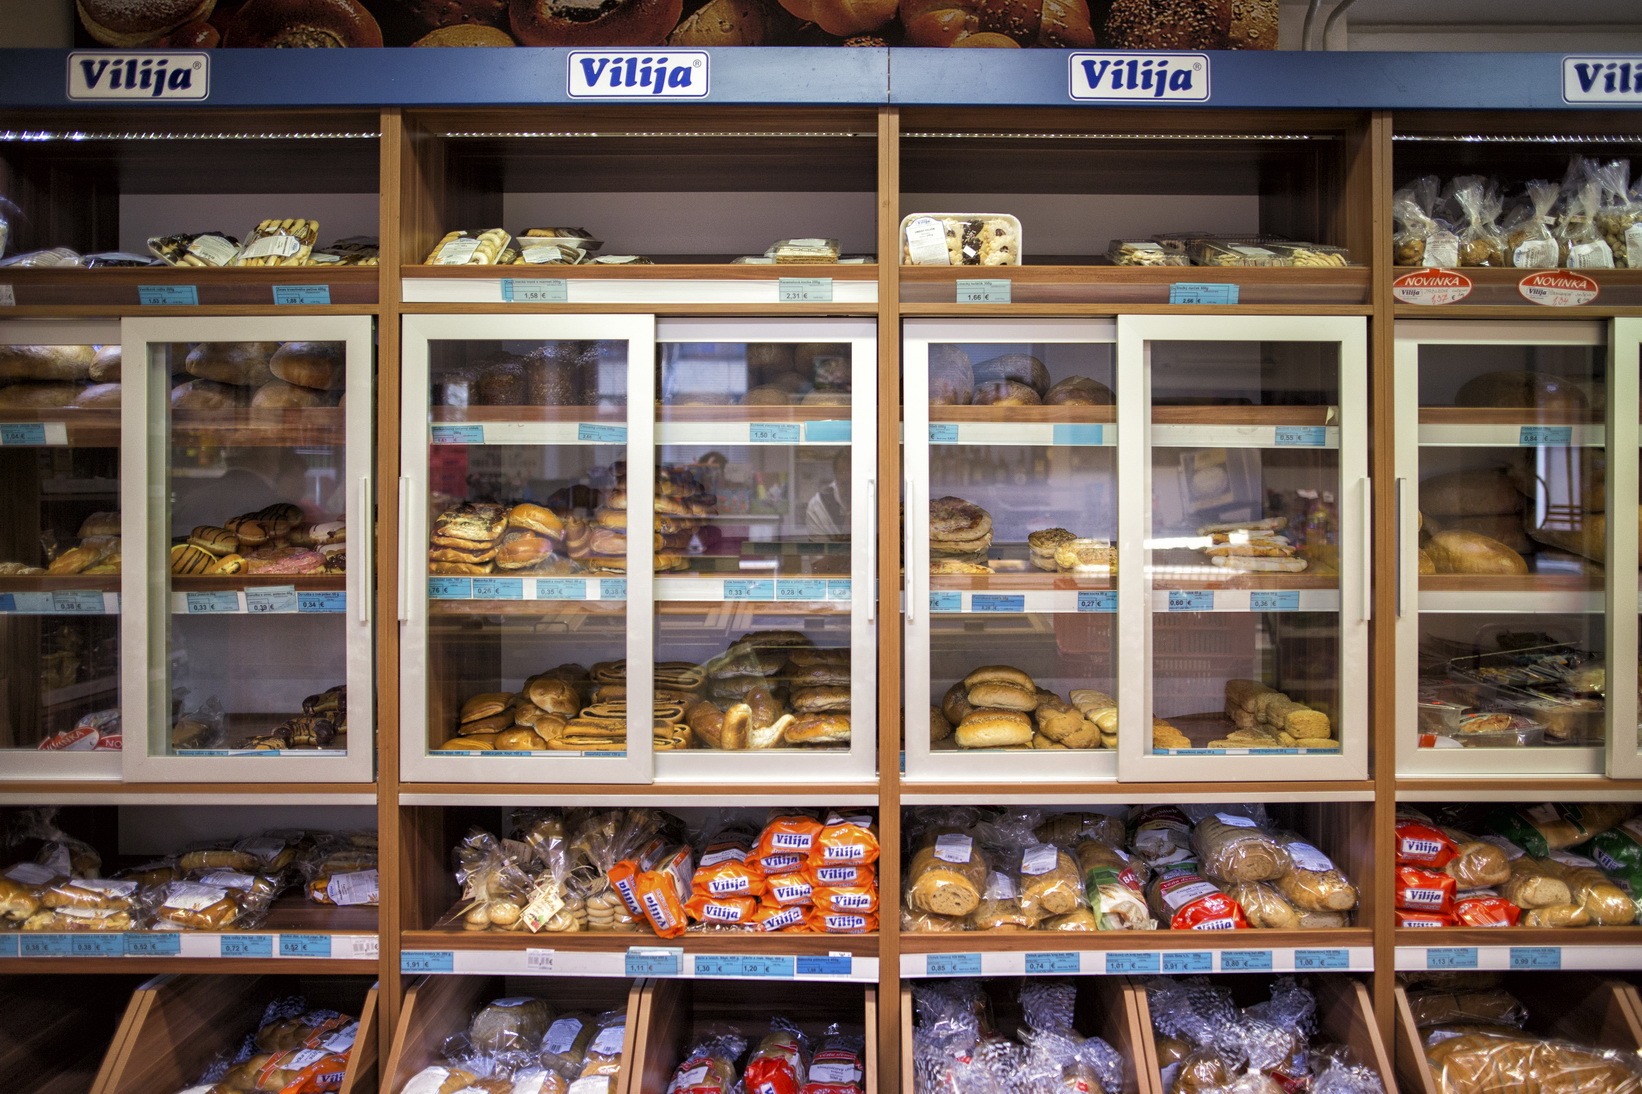 Foto pekáreň Vilija Čadca 2016